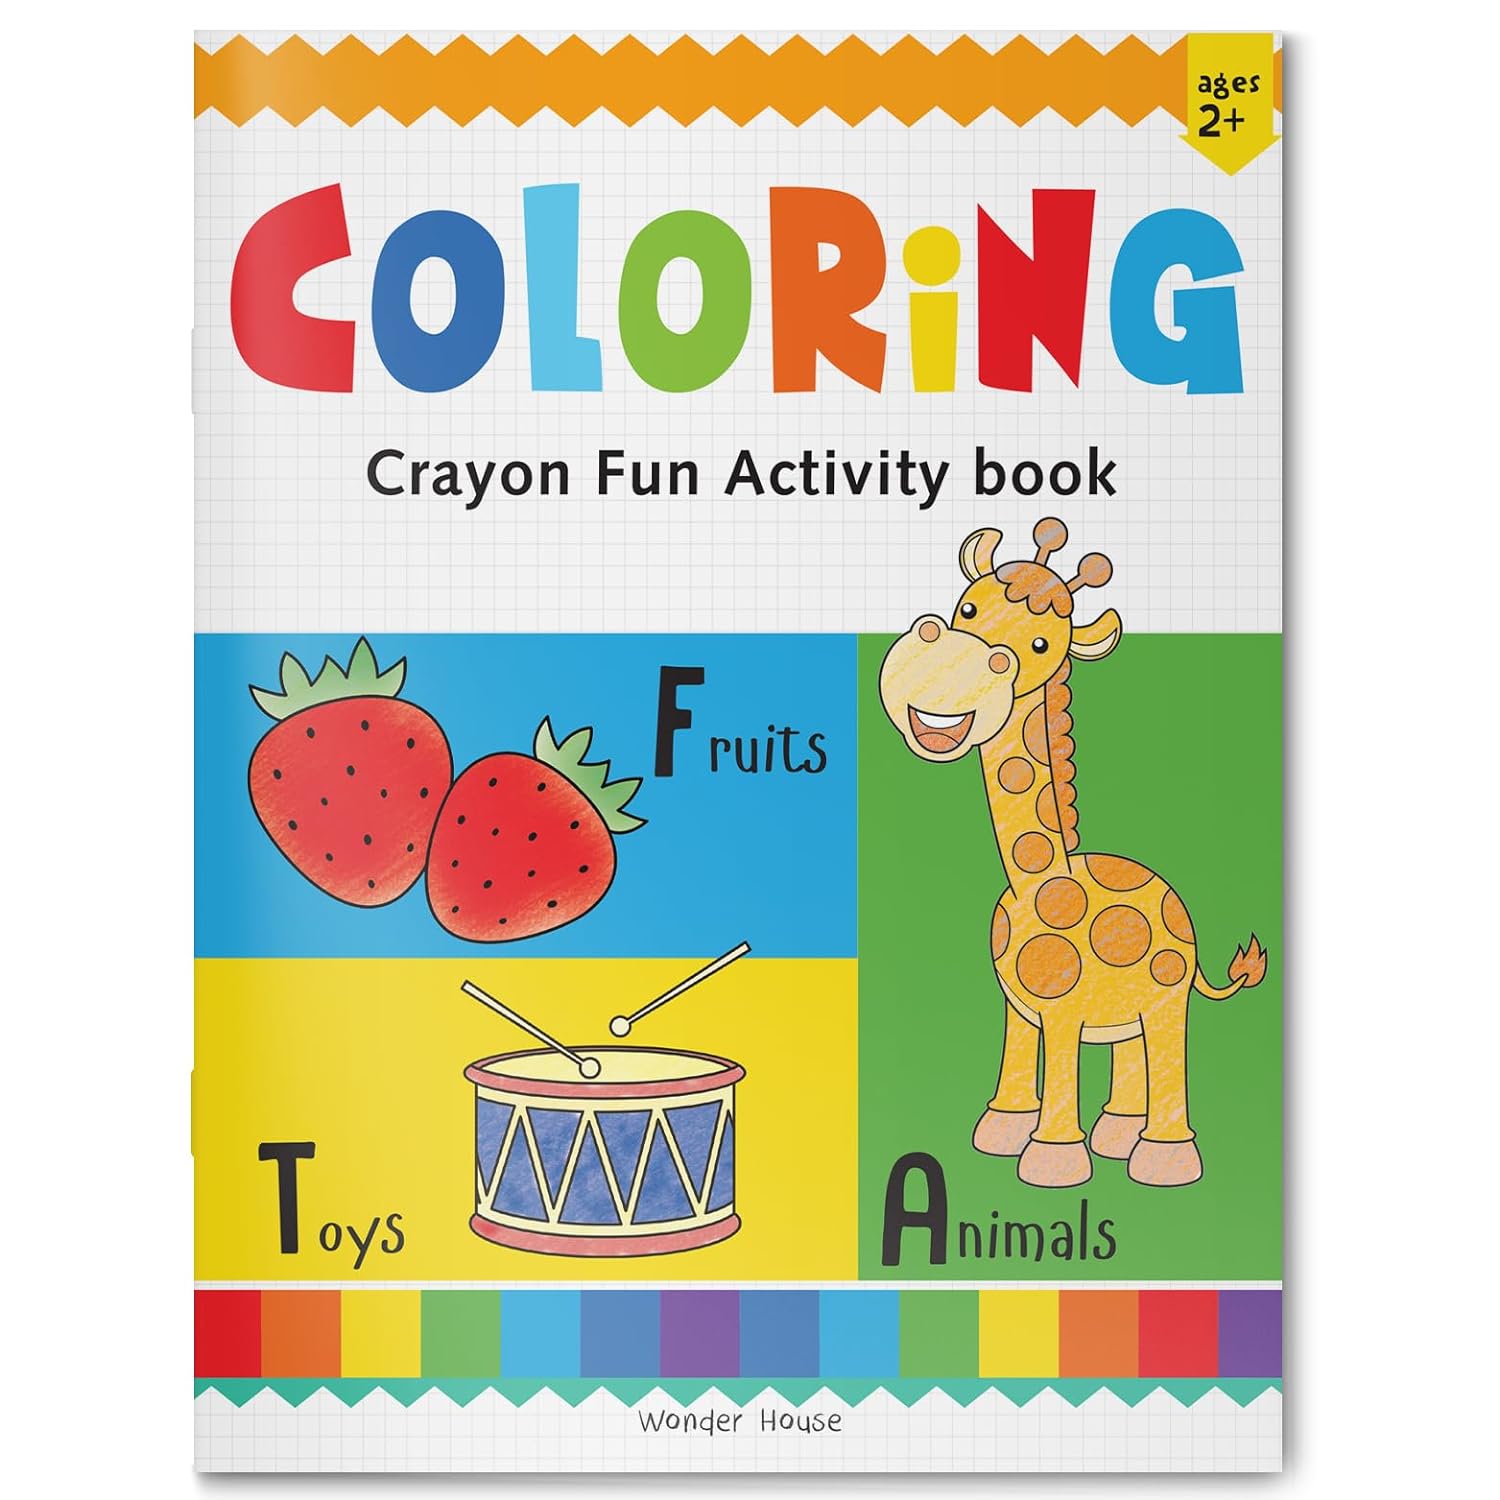 Coloring - Crayon Fun Activity Book For Age 2+